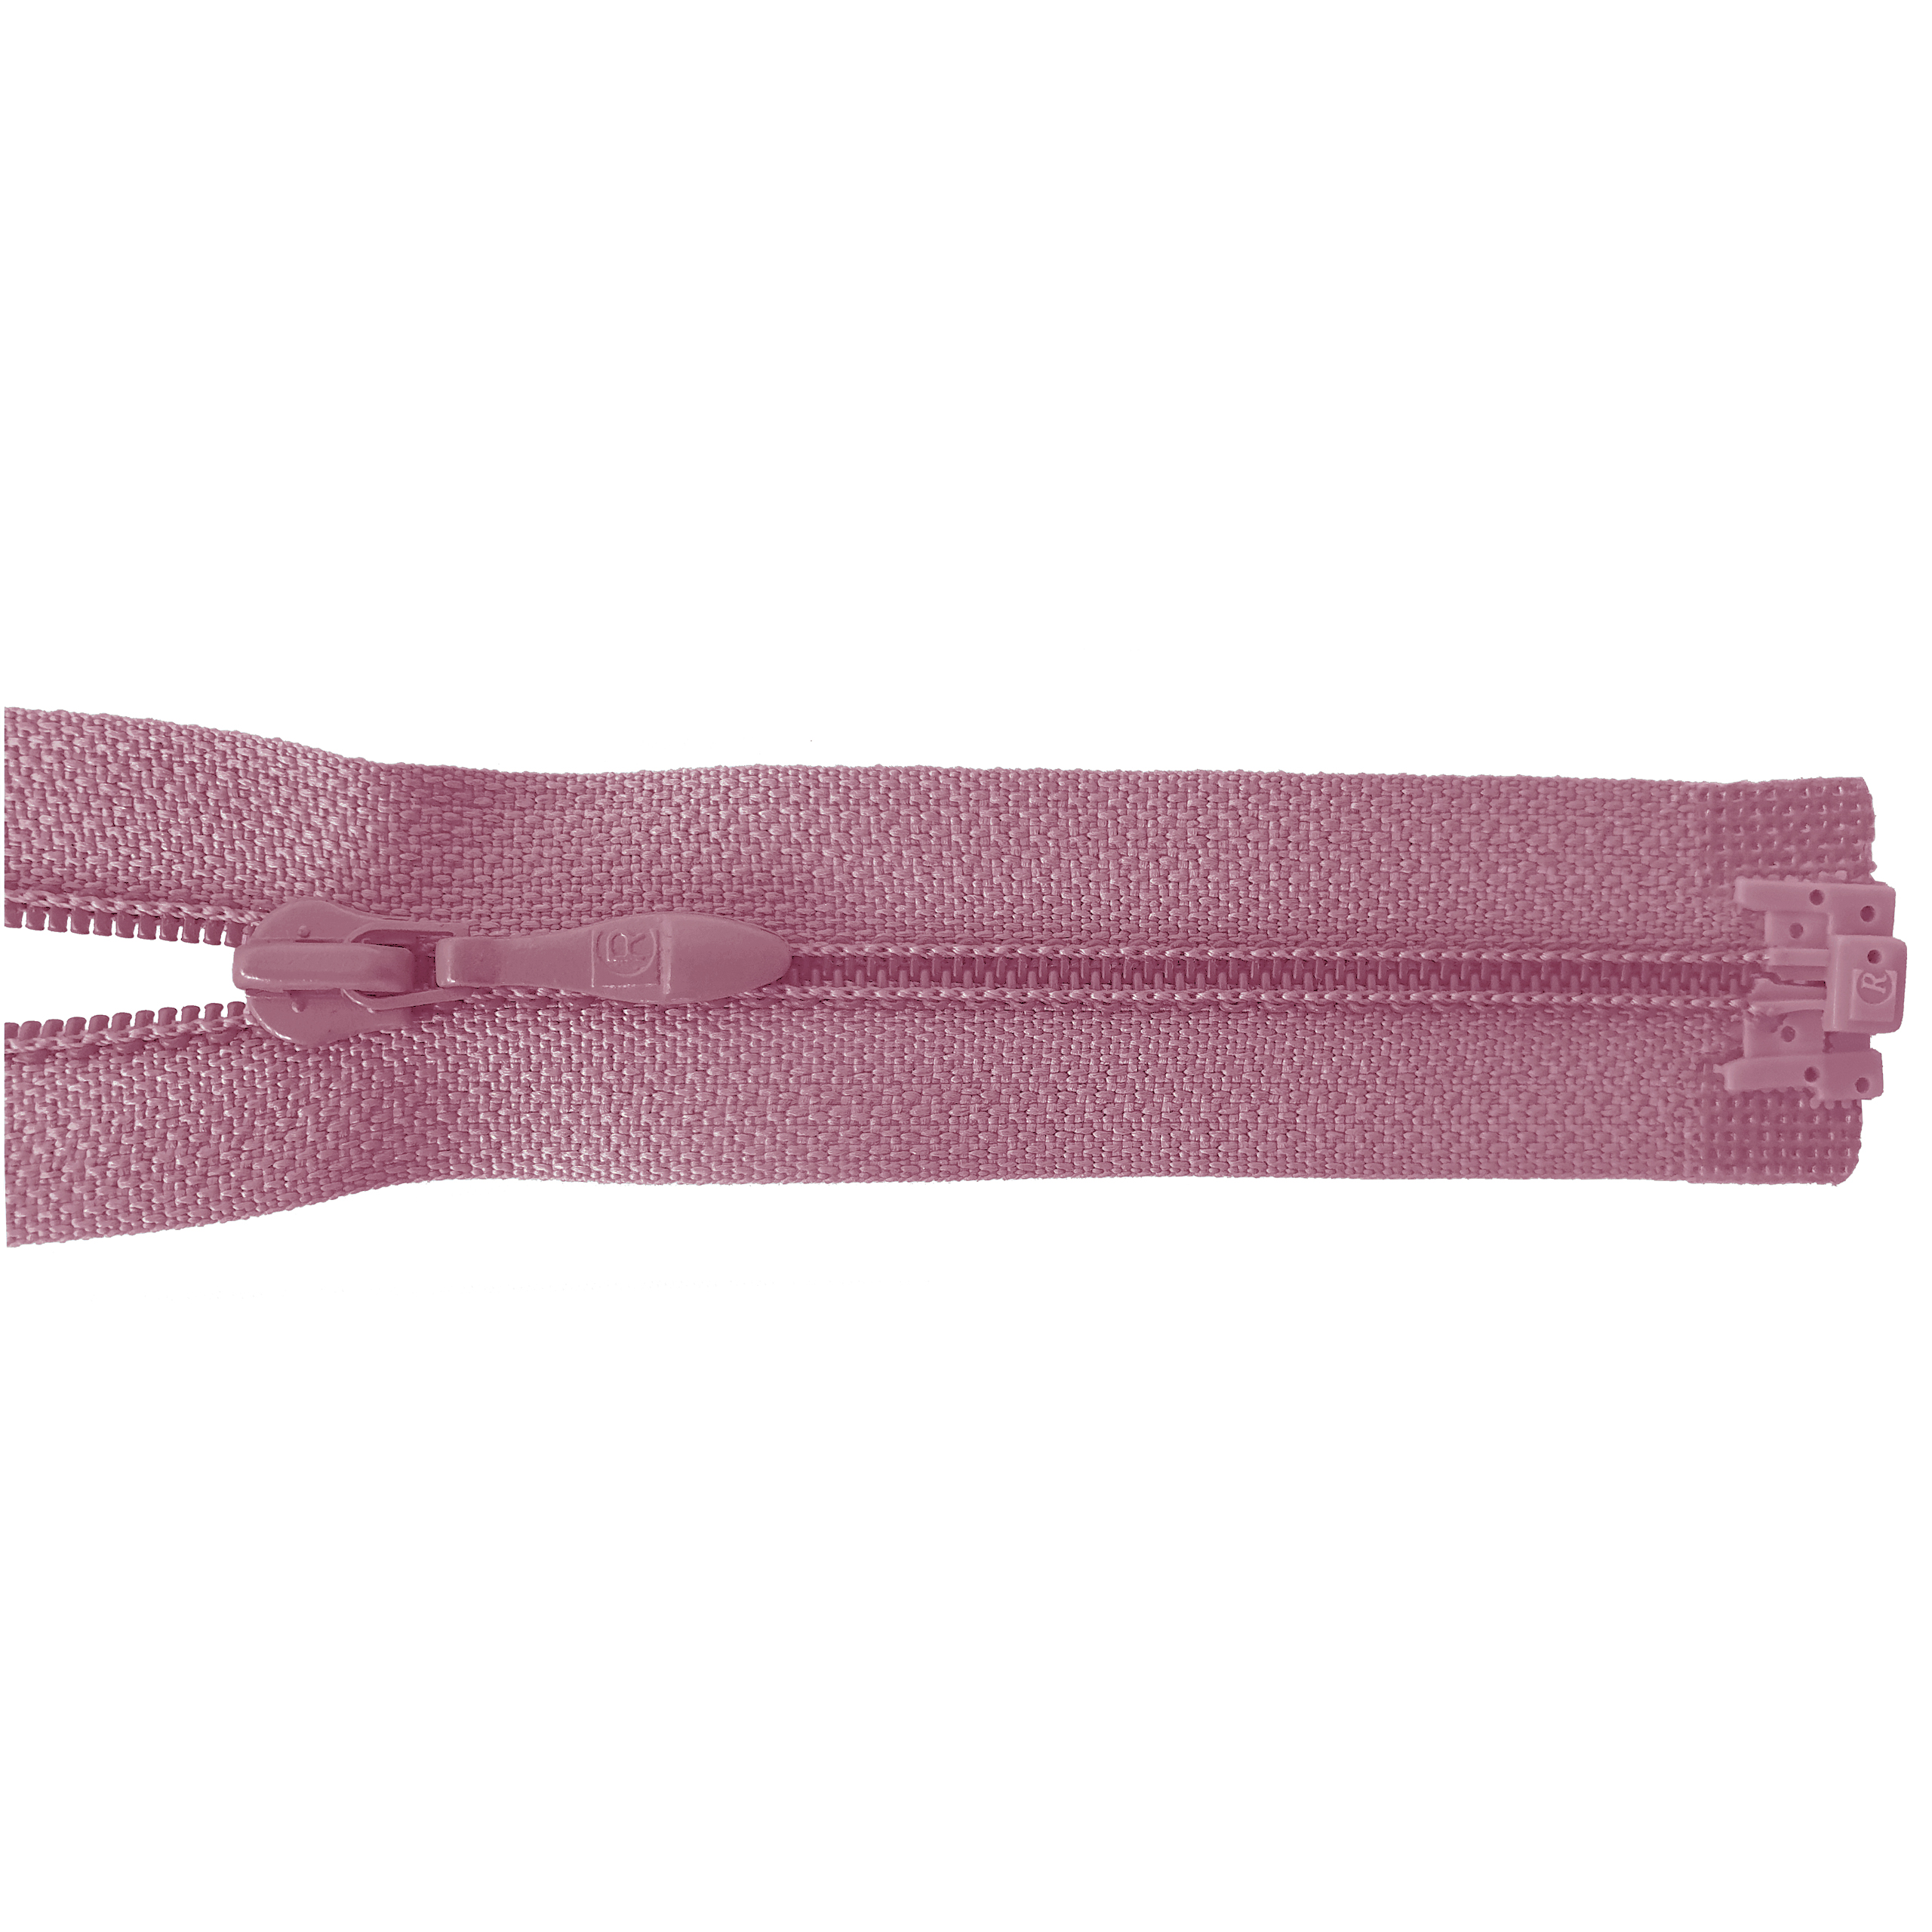 zipper 60cm,divisible, PES spiral, fein, antique pink